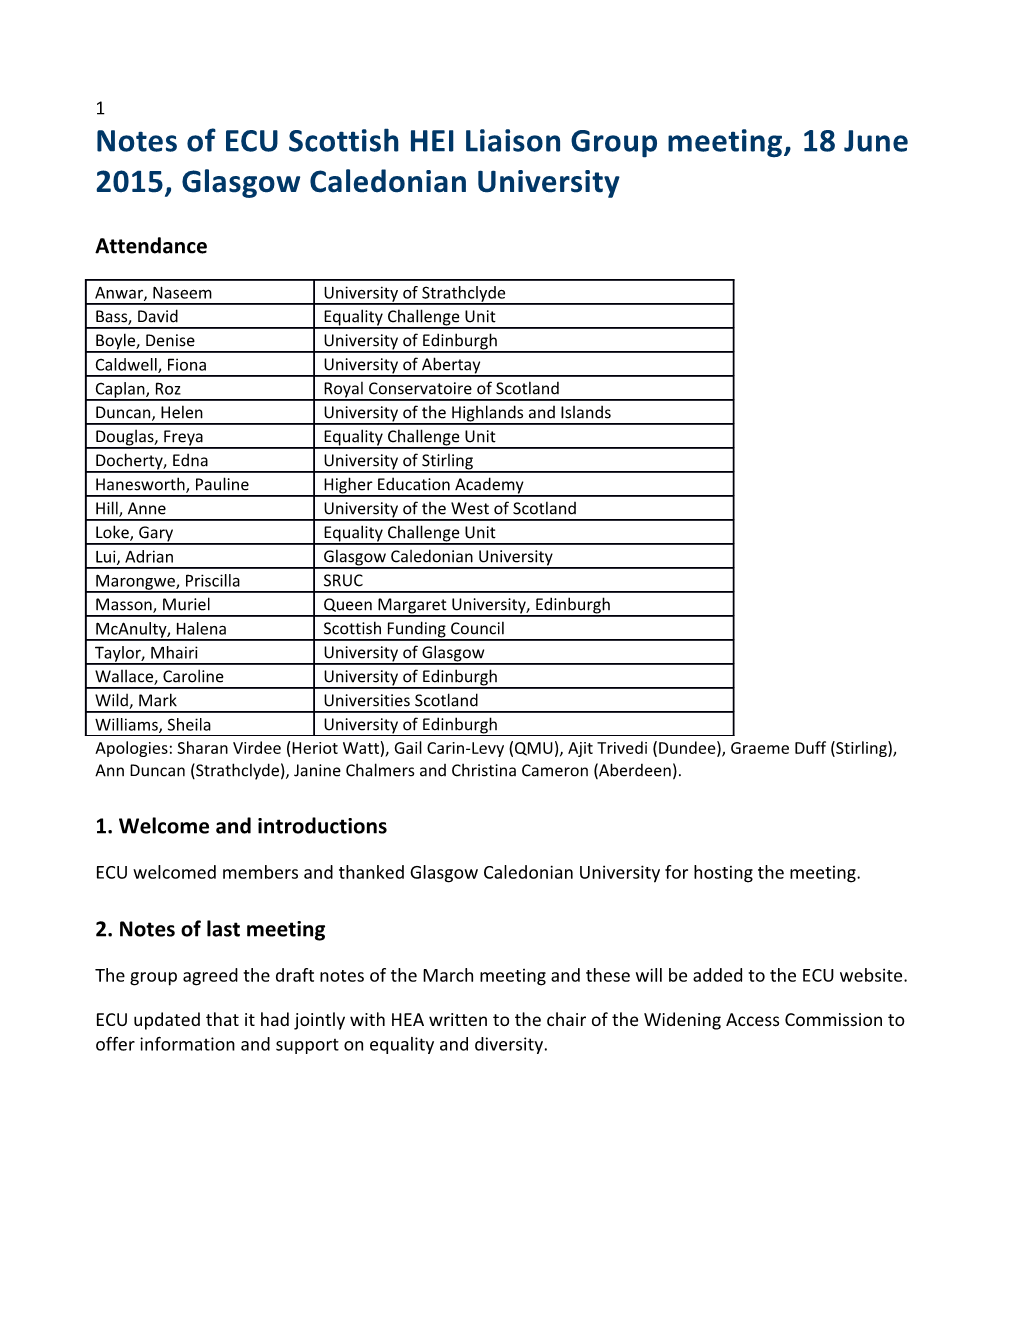 Notes of ECU Scottish HEI Liaison Group Meeting, 18 June 2015,Glasgow Caledonian University